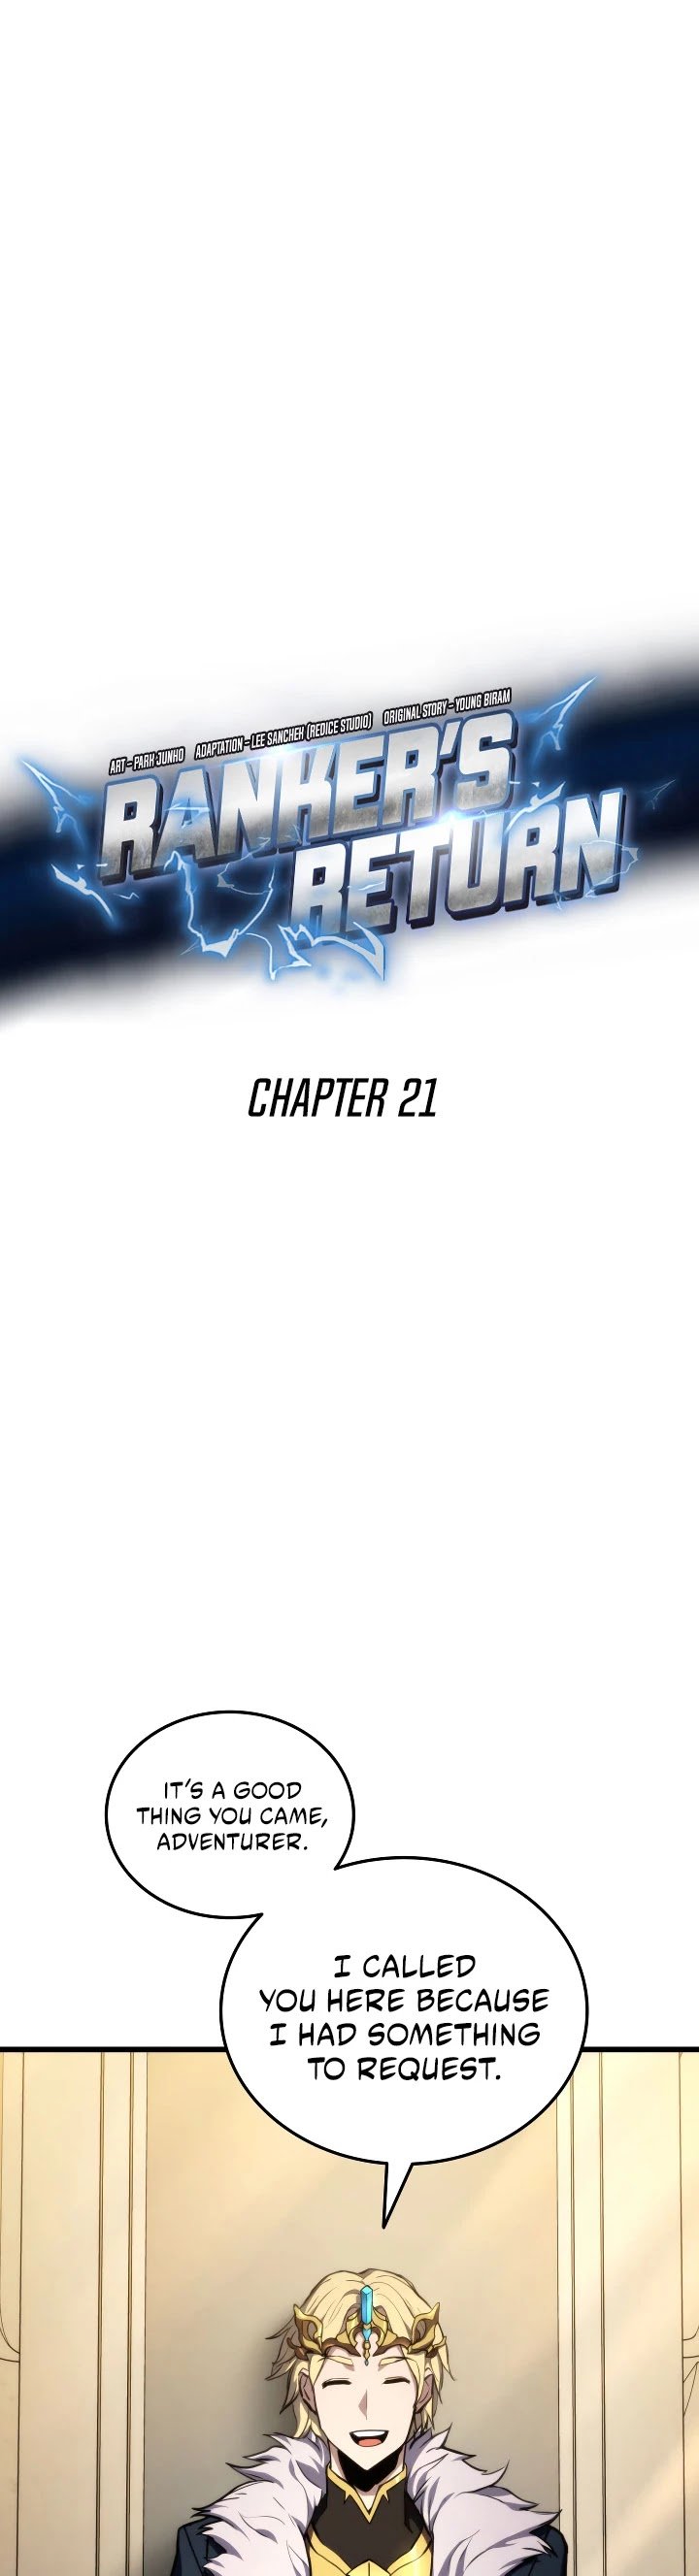 Ranker’s Return (Remake) chapter 21